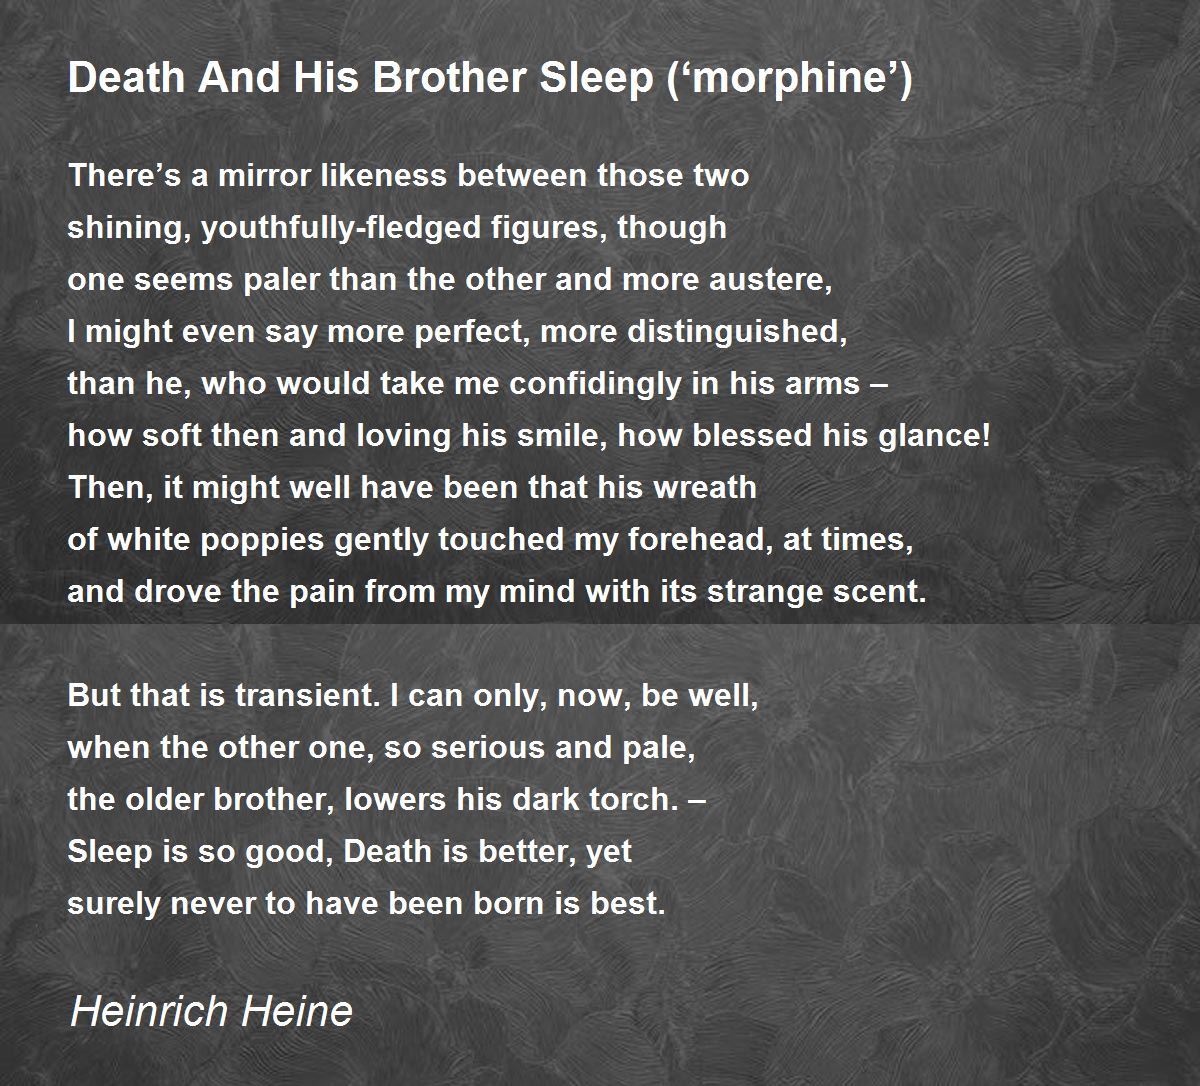 Death And His Brother Sleep (‘morphine’) Poem by Heinrich Heine - Poem